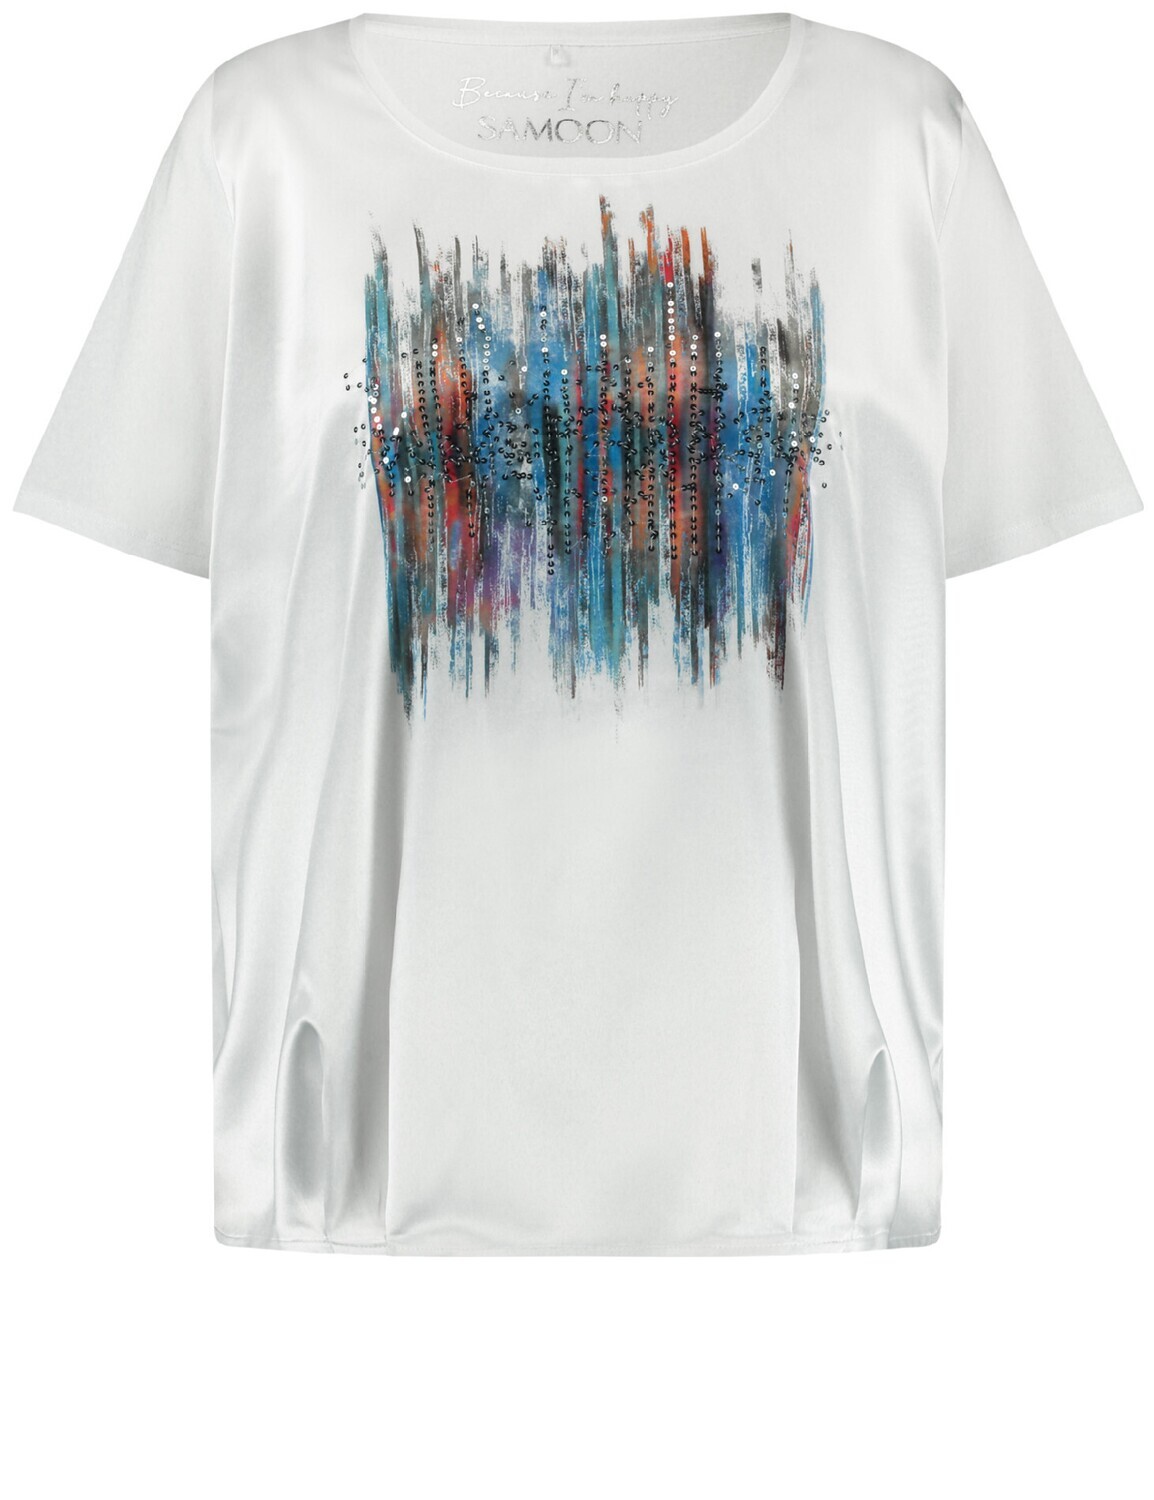 Samoon blouse print 471019- 26113, Size: 44